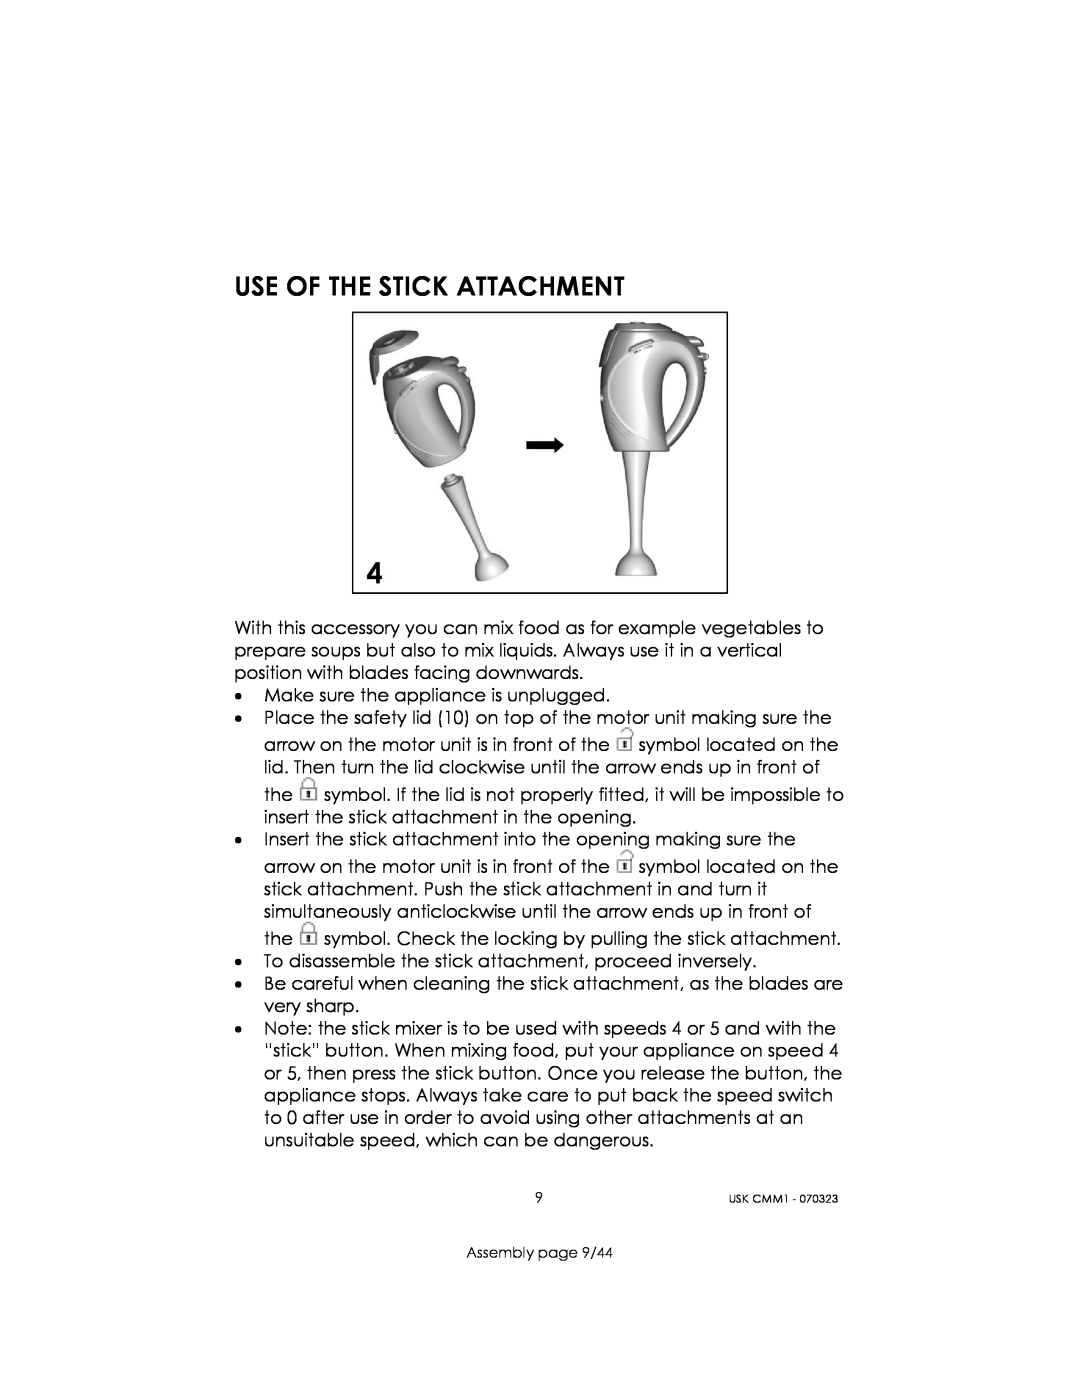 Kalorik USK CMM 1 manual Use Of The Stick Attachment, Assembly page 9/44 